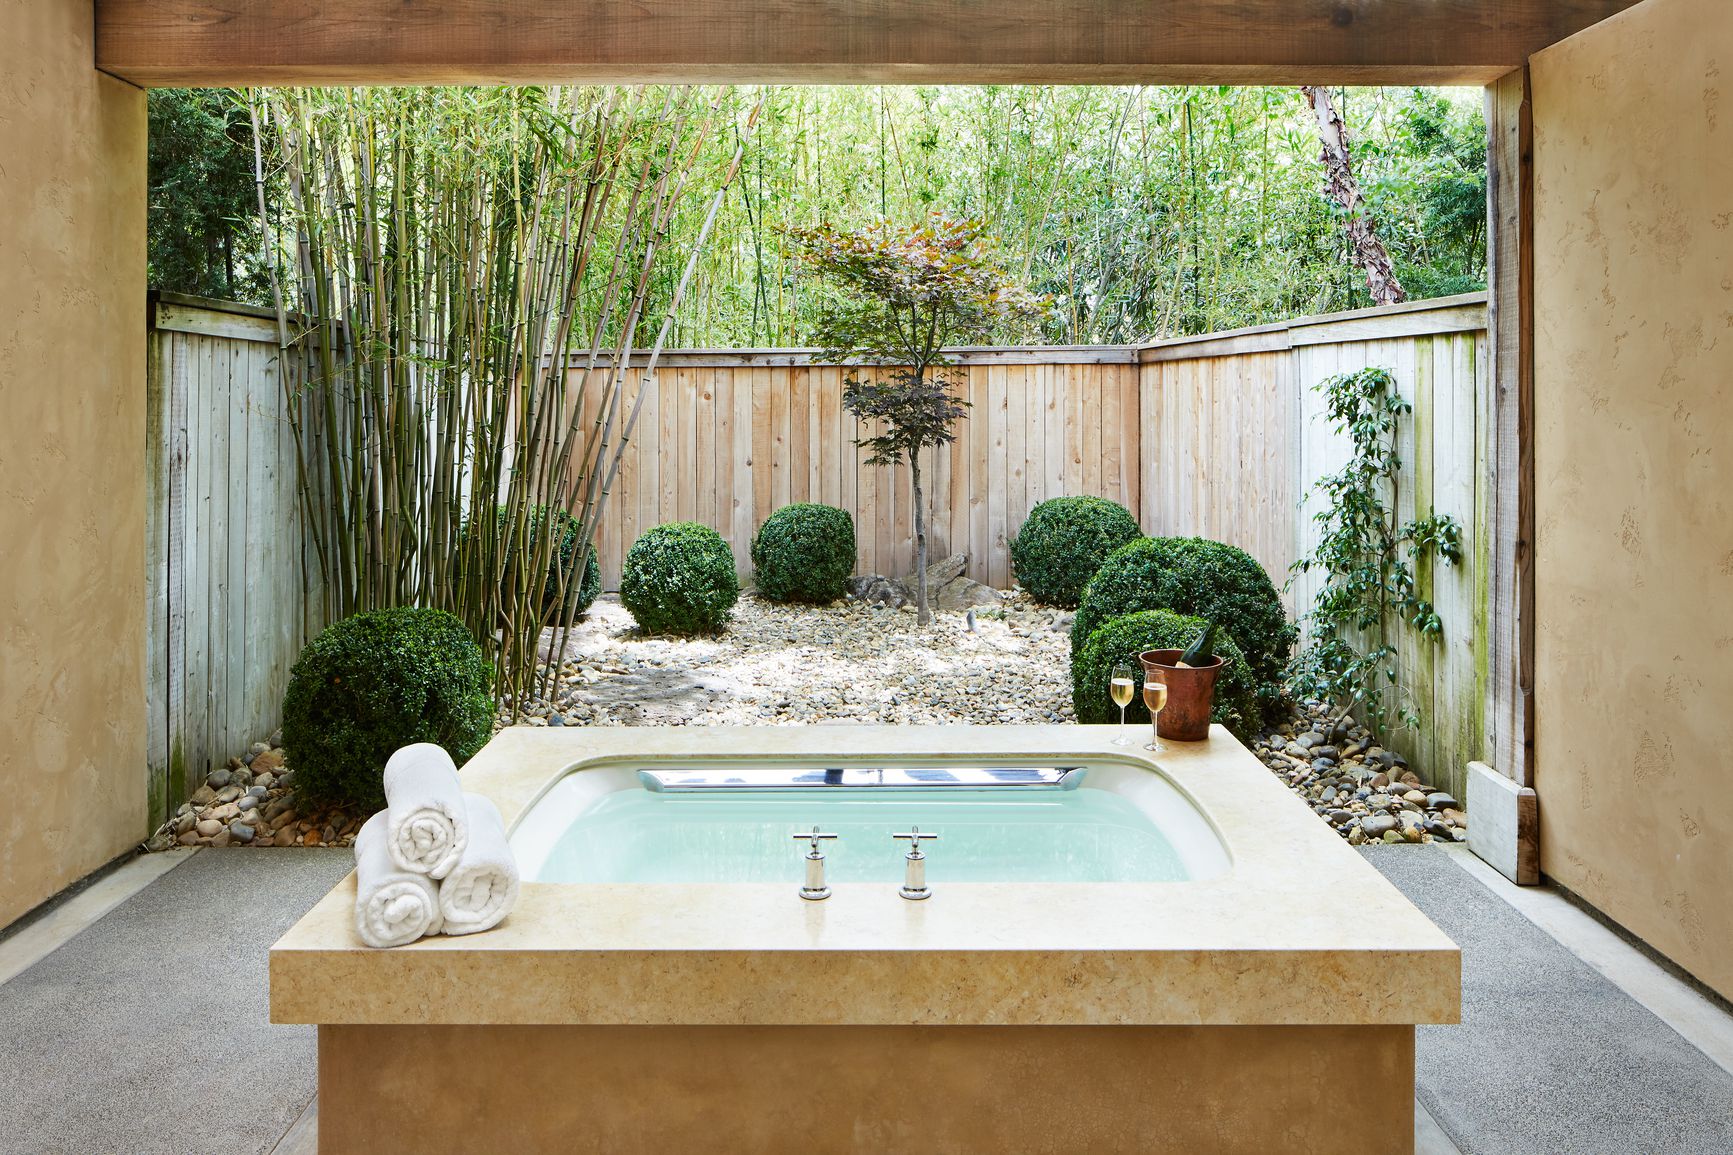 Yakuzi Pool Garten Einzigartig where to Install A Hot Tub